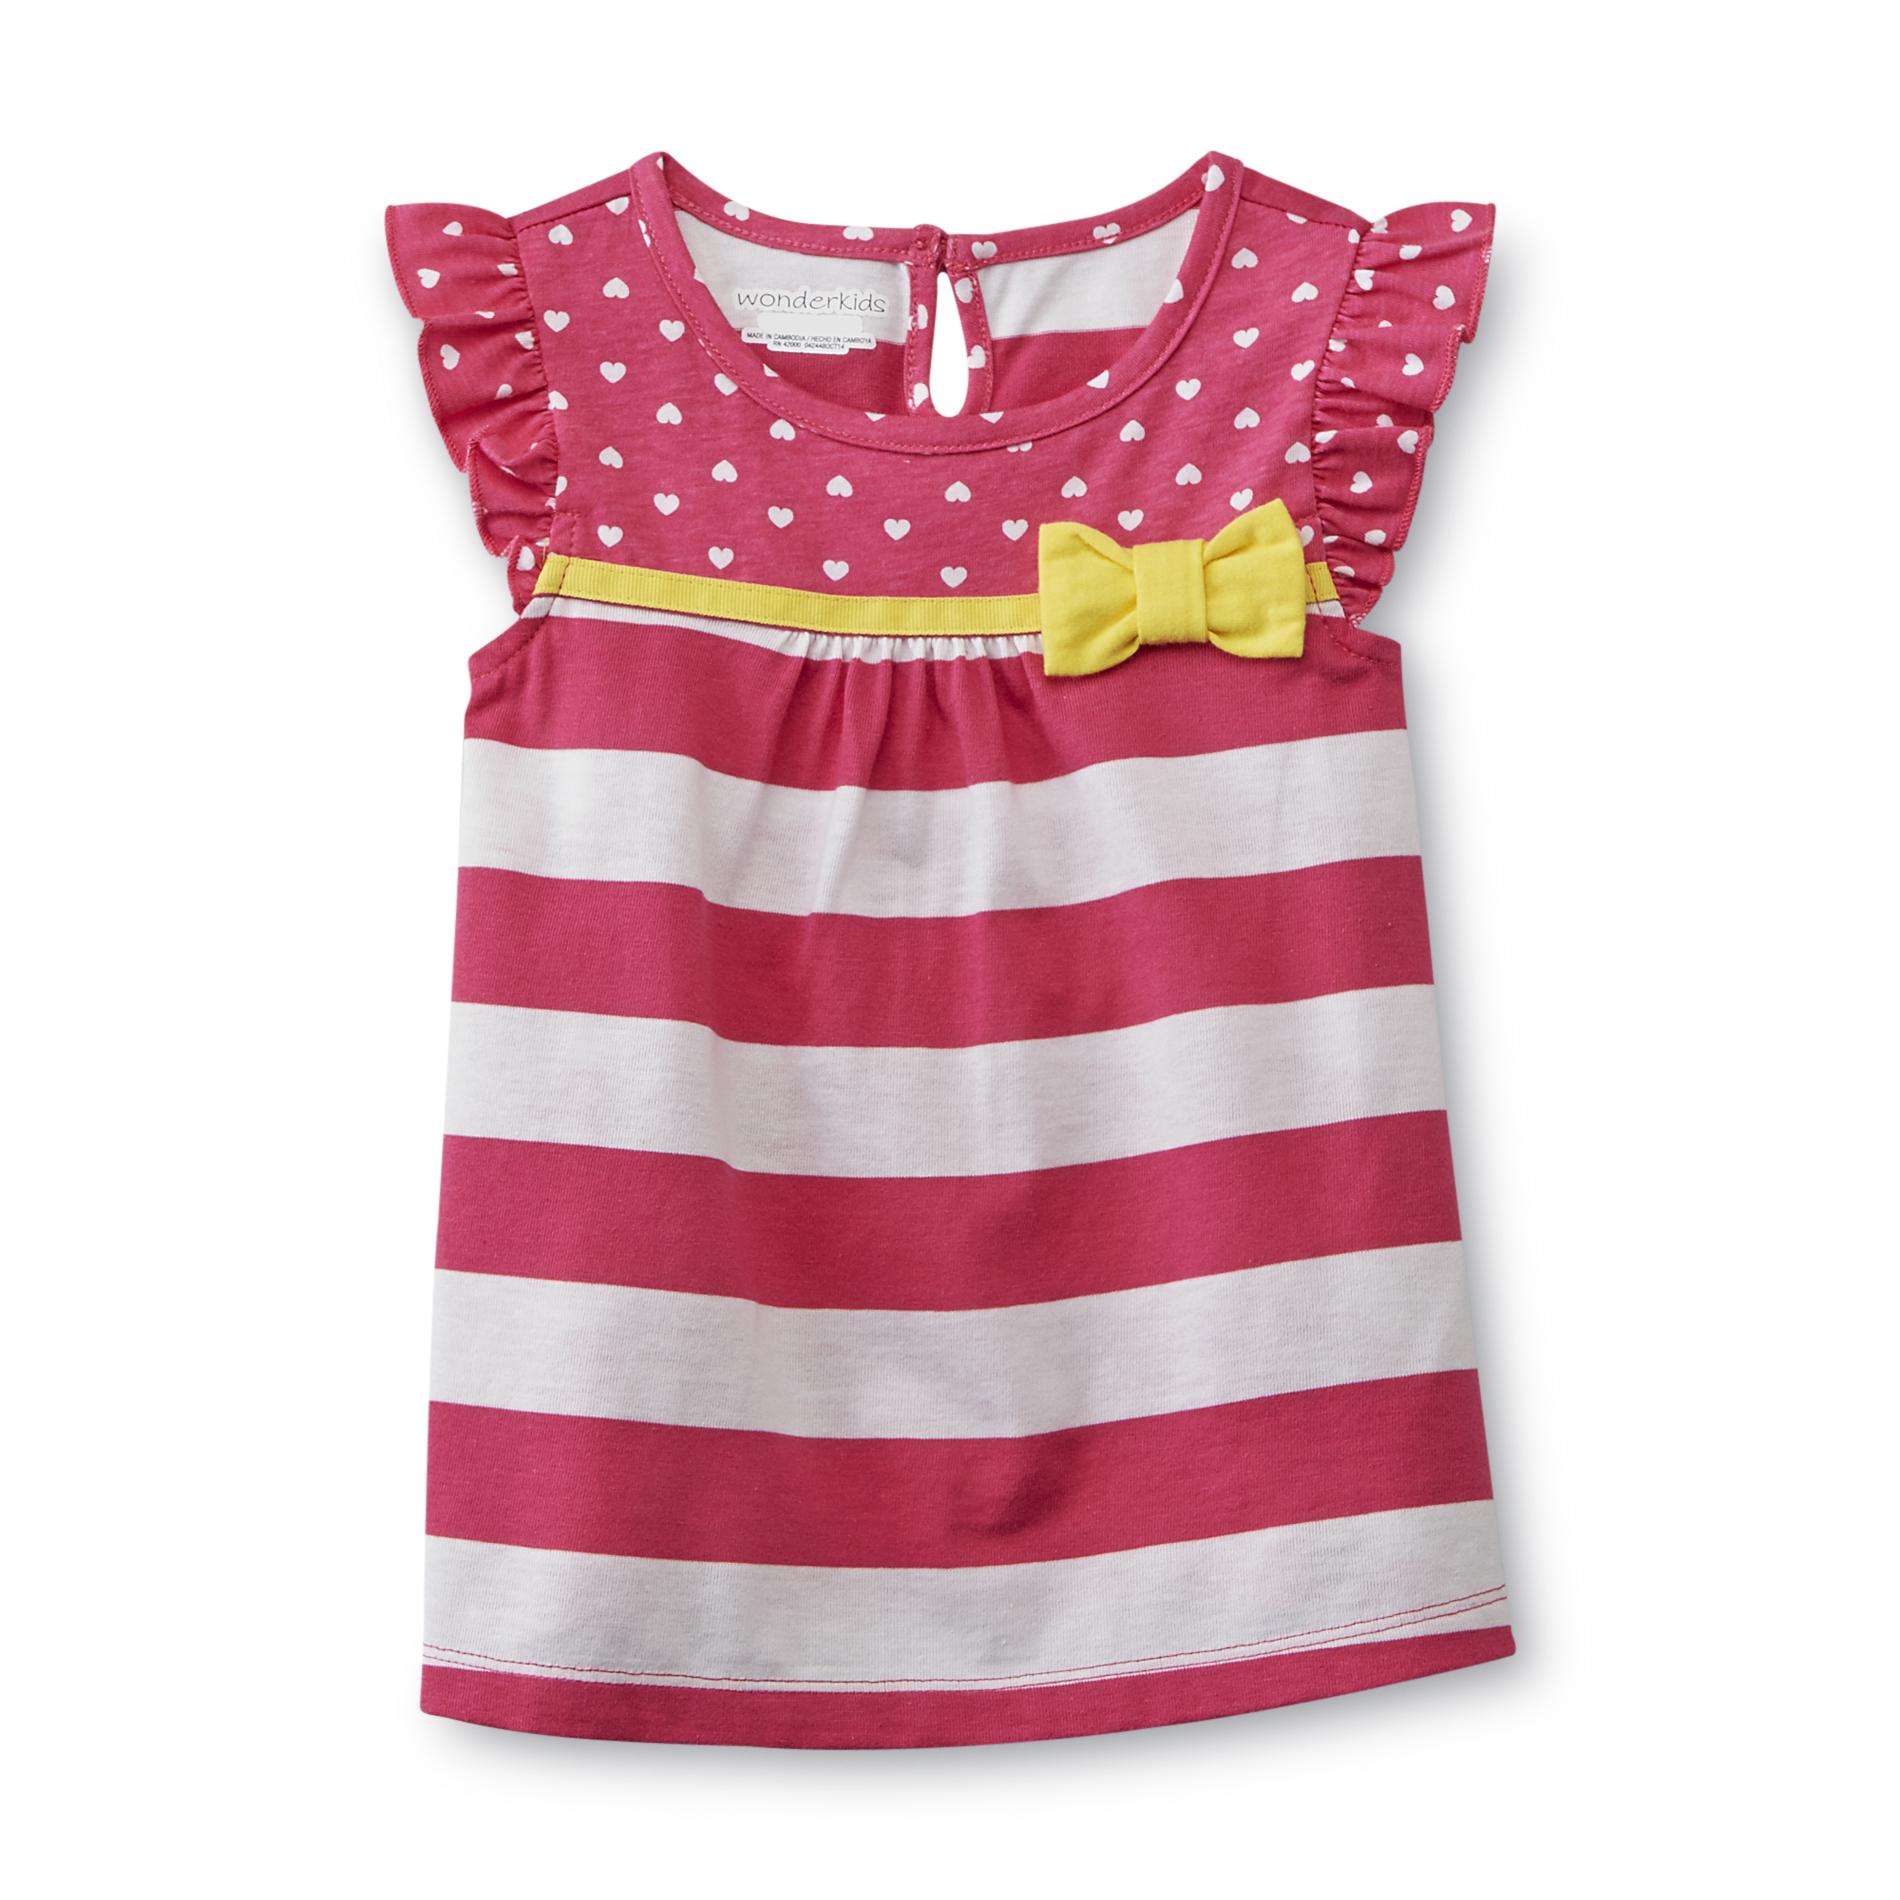 WonderKids Infant & Toddler Girl's Cap Sleeve Tunic Top - Striped